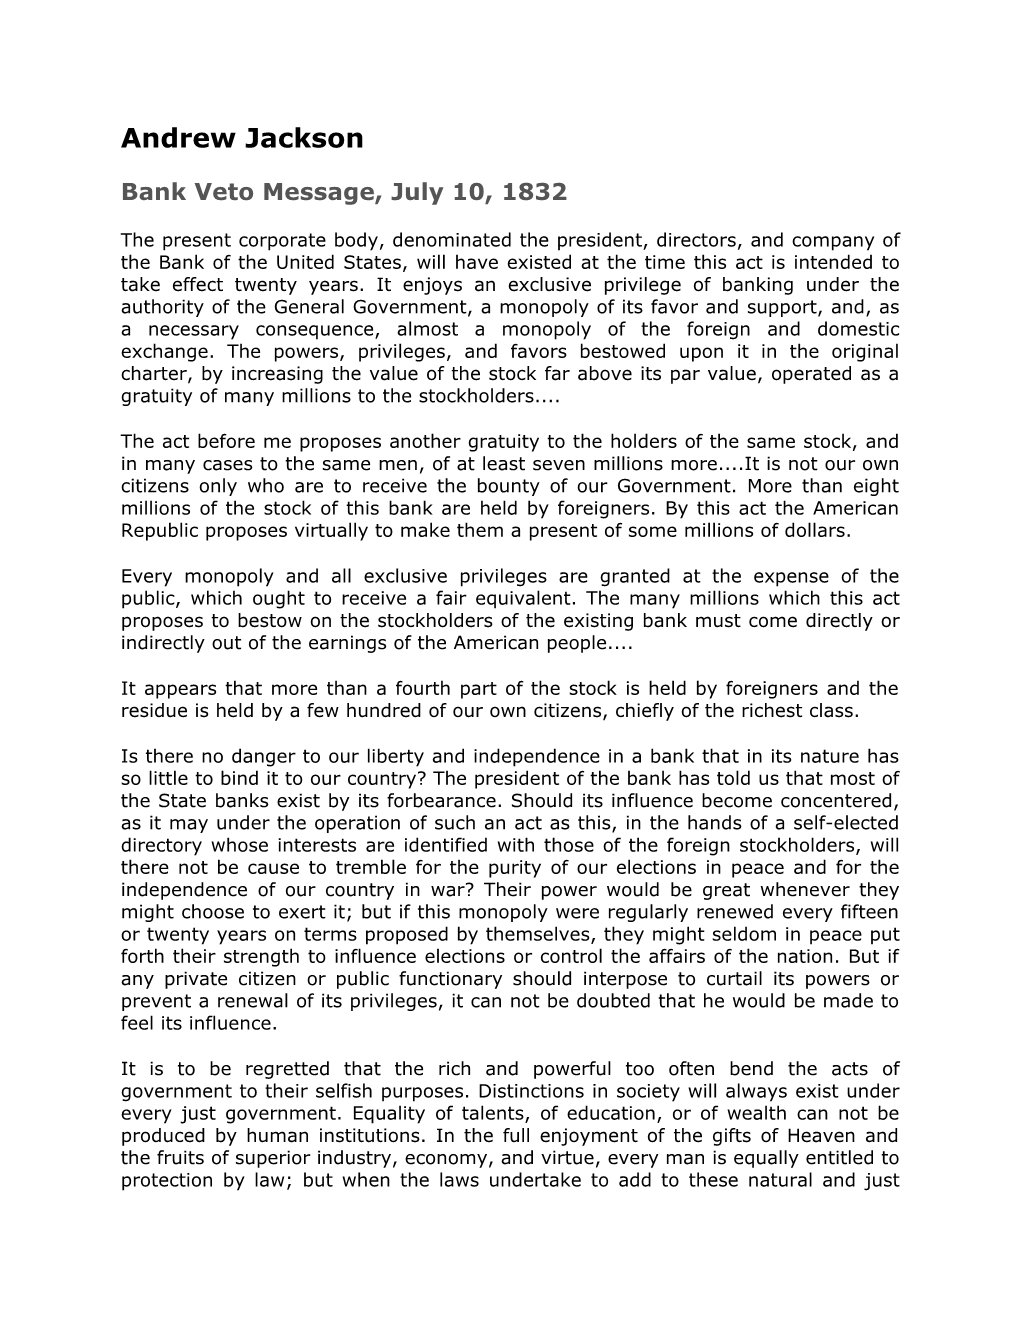 Bank Veto Message, July 10, 1832